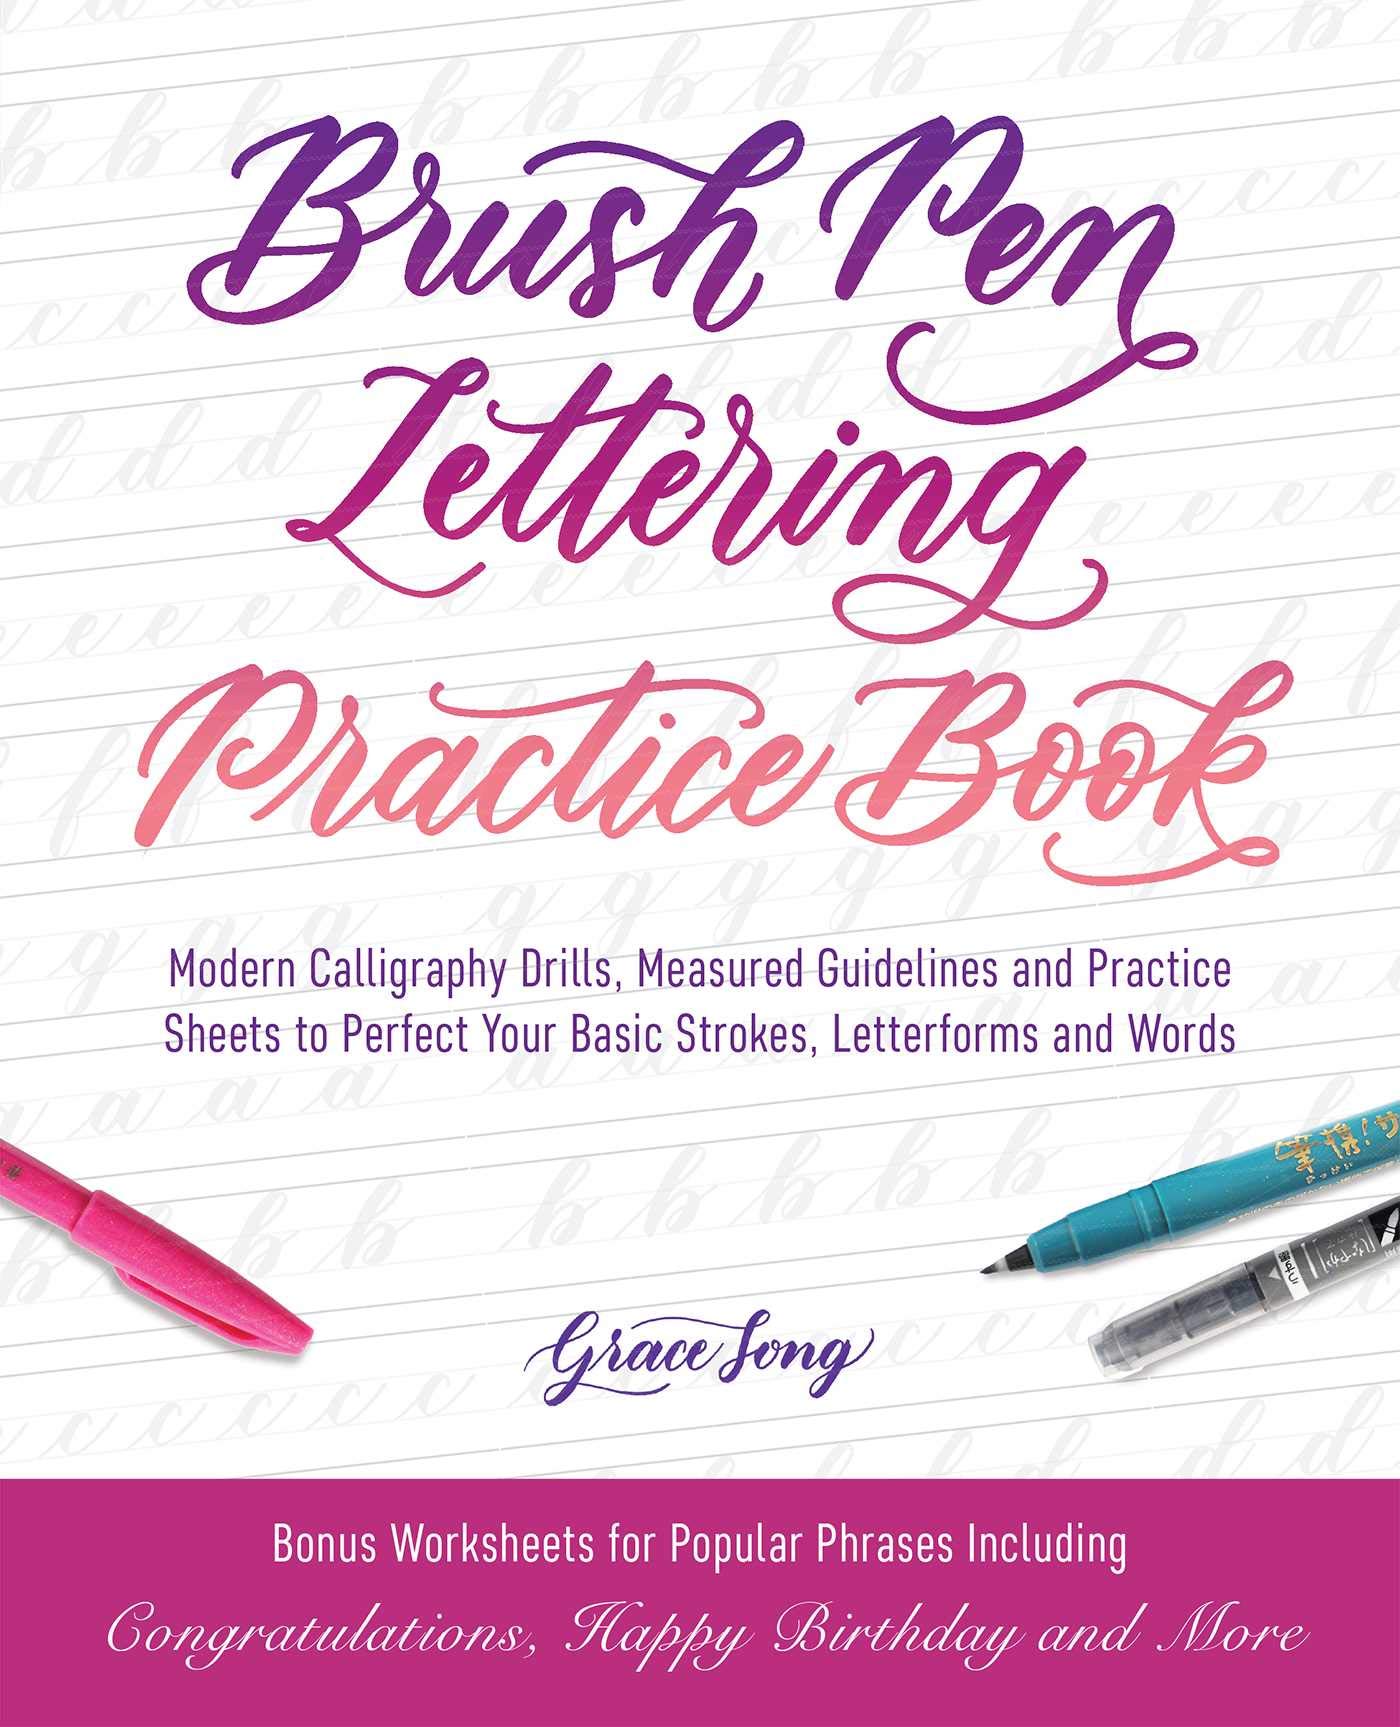 http://ulyssespress.com/wp-content/uploads/Brush-Pen-Lettering-Practice.jpg